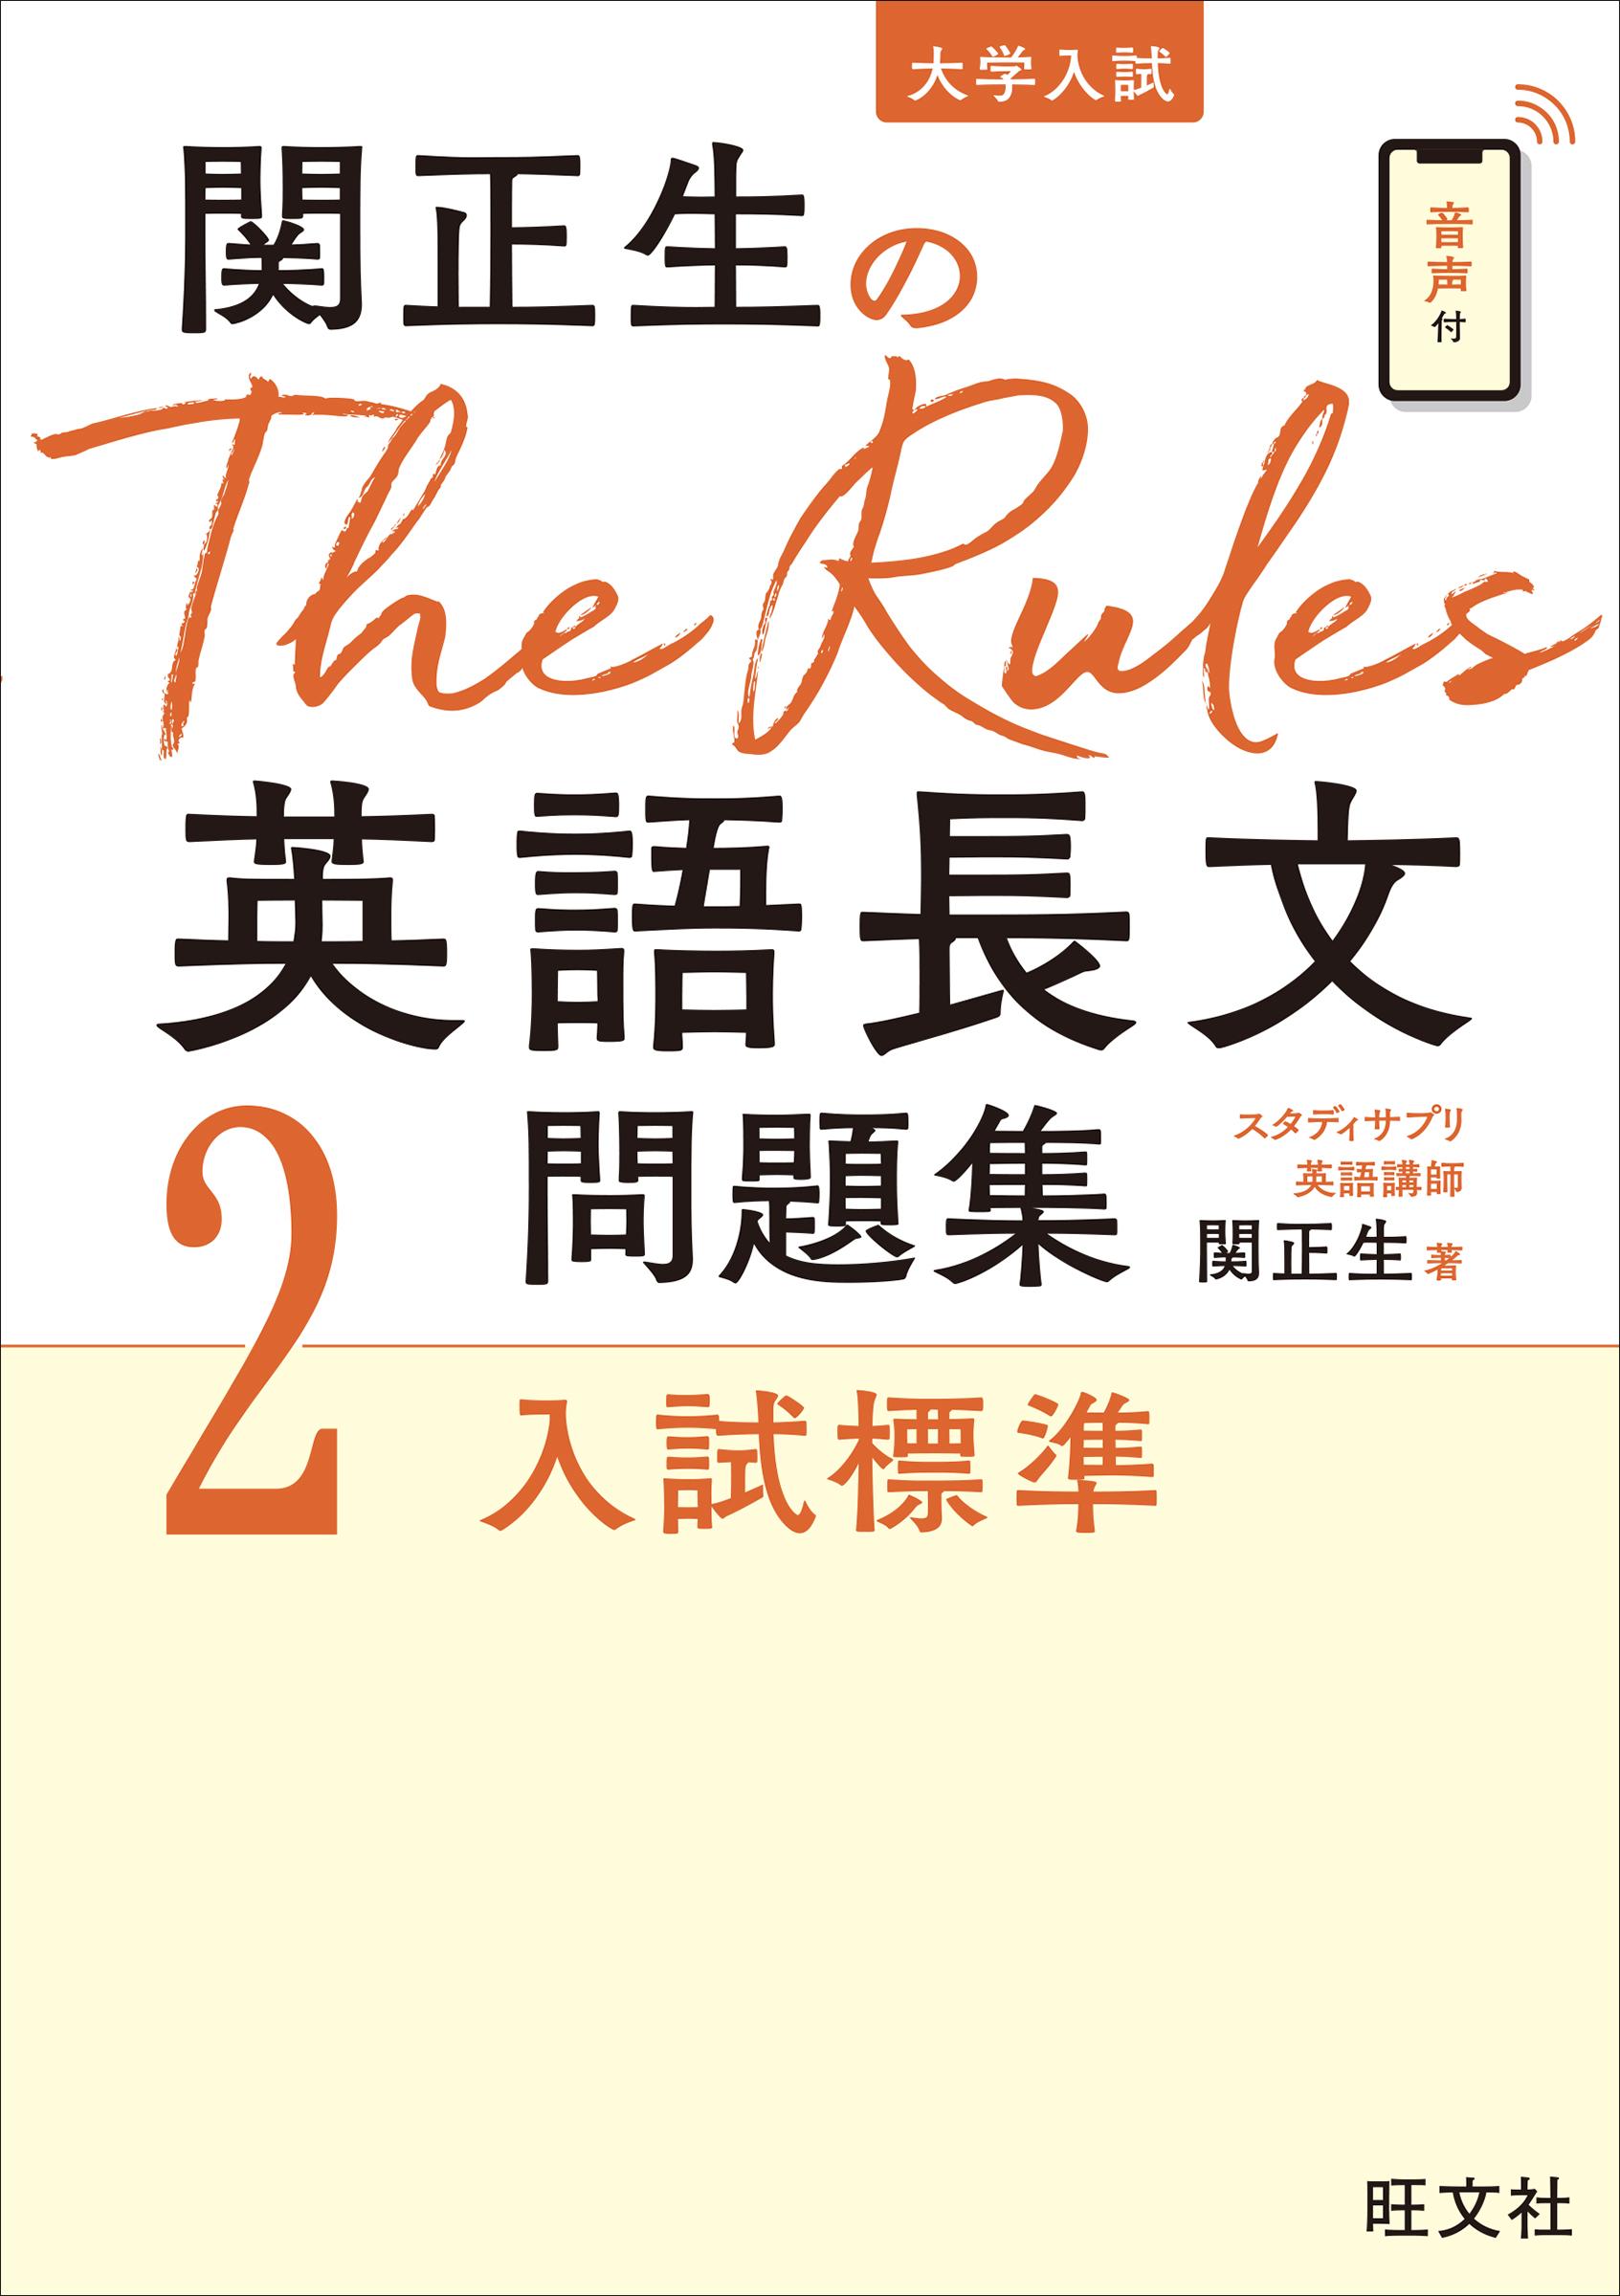 関正生のThe Rules英語長文問題集2入試標準（音声ＤＬ付）